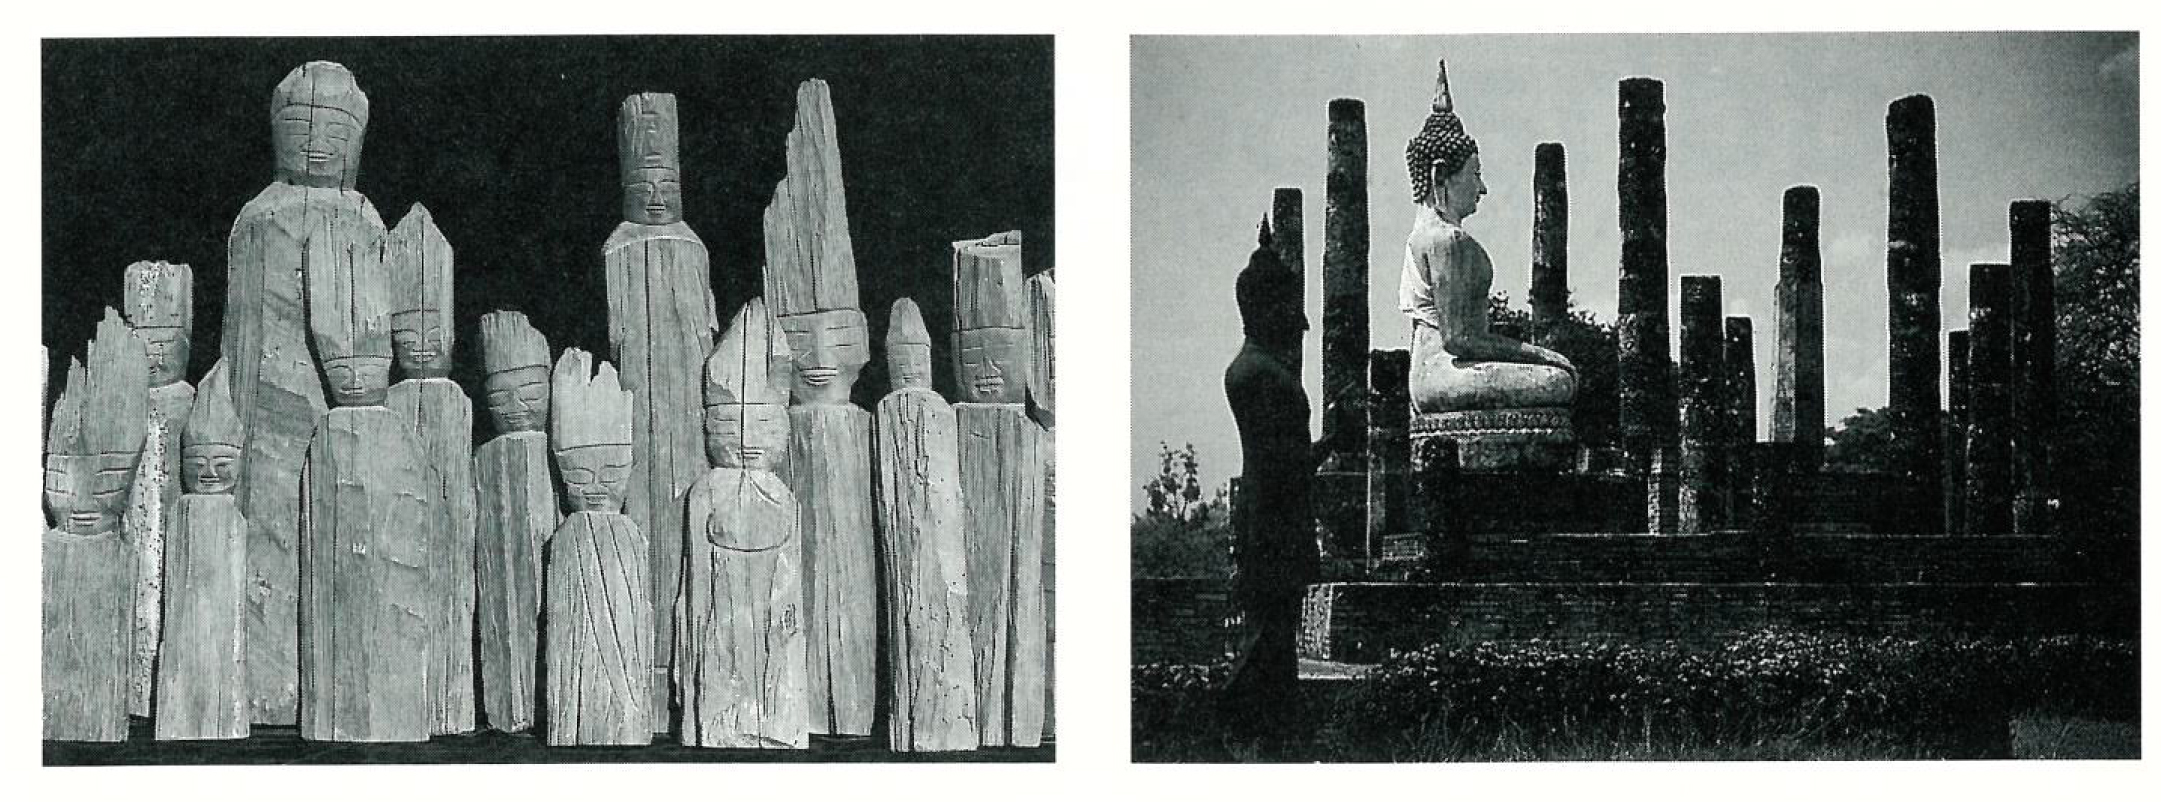 (left) One Thousand Bodhisattvas, Enku circa 1675-1695 ("mature period"). Japan. Wood. (right) Seated Buddha in Ruins of Wat Sra Sri, Nancy Shanahan, photographer, 1986. Old Sukhothai, Thailand.